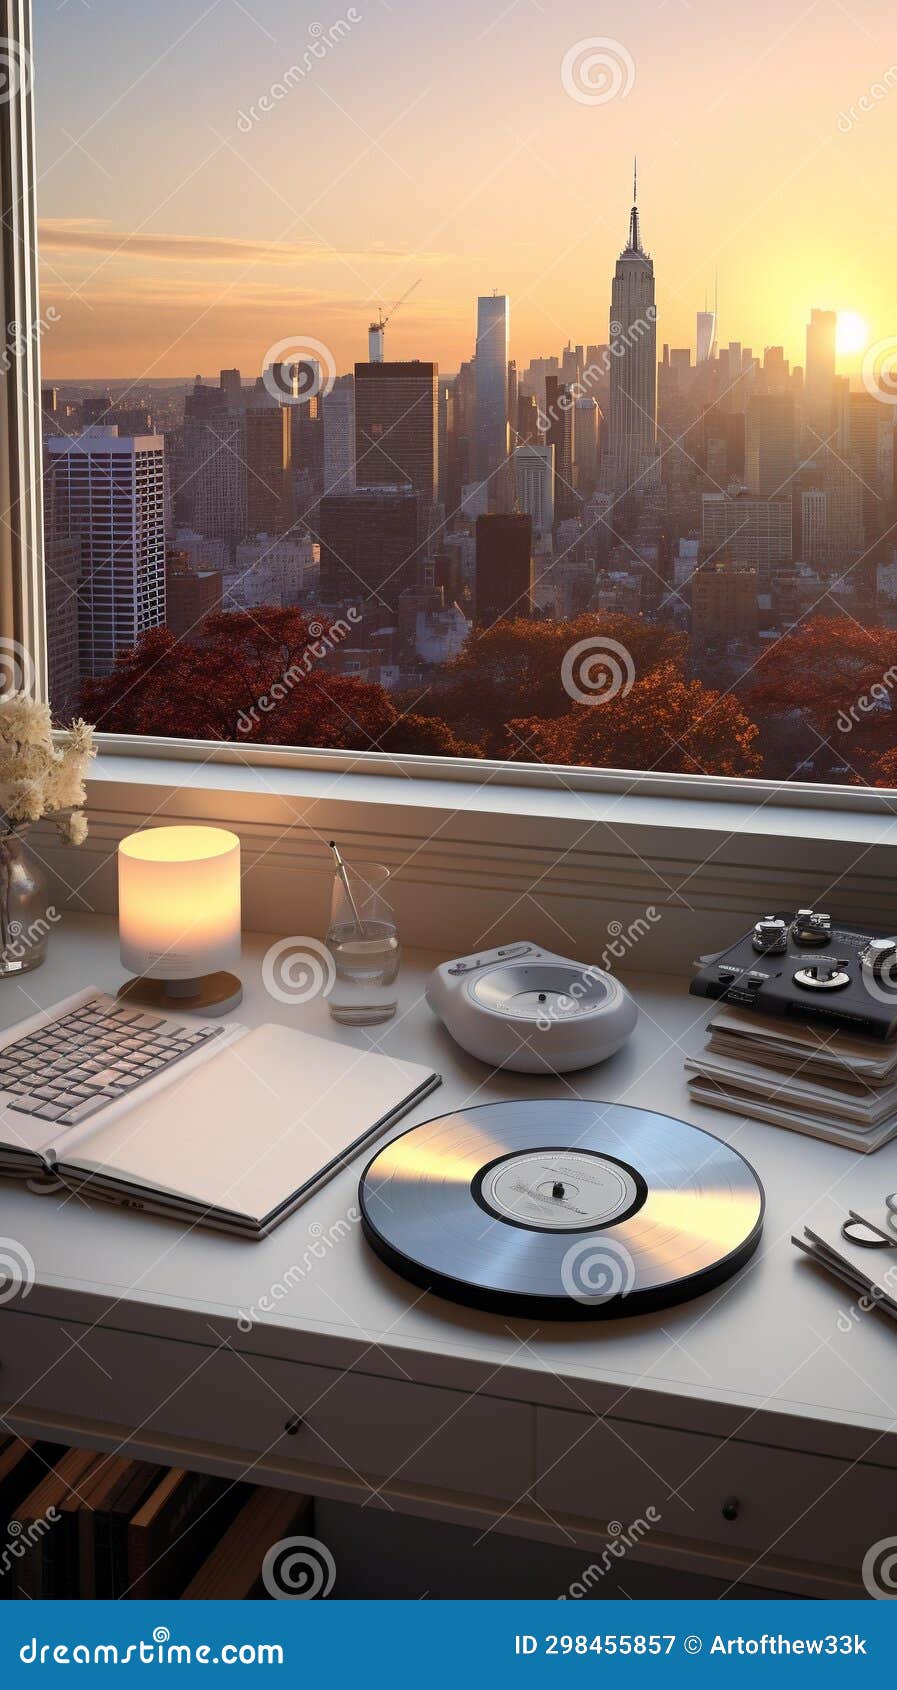 minimalist desk: serene cityscape, white marble, silver laptop, crumpled papers, fidget spinner, white noise